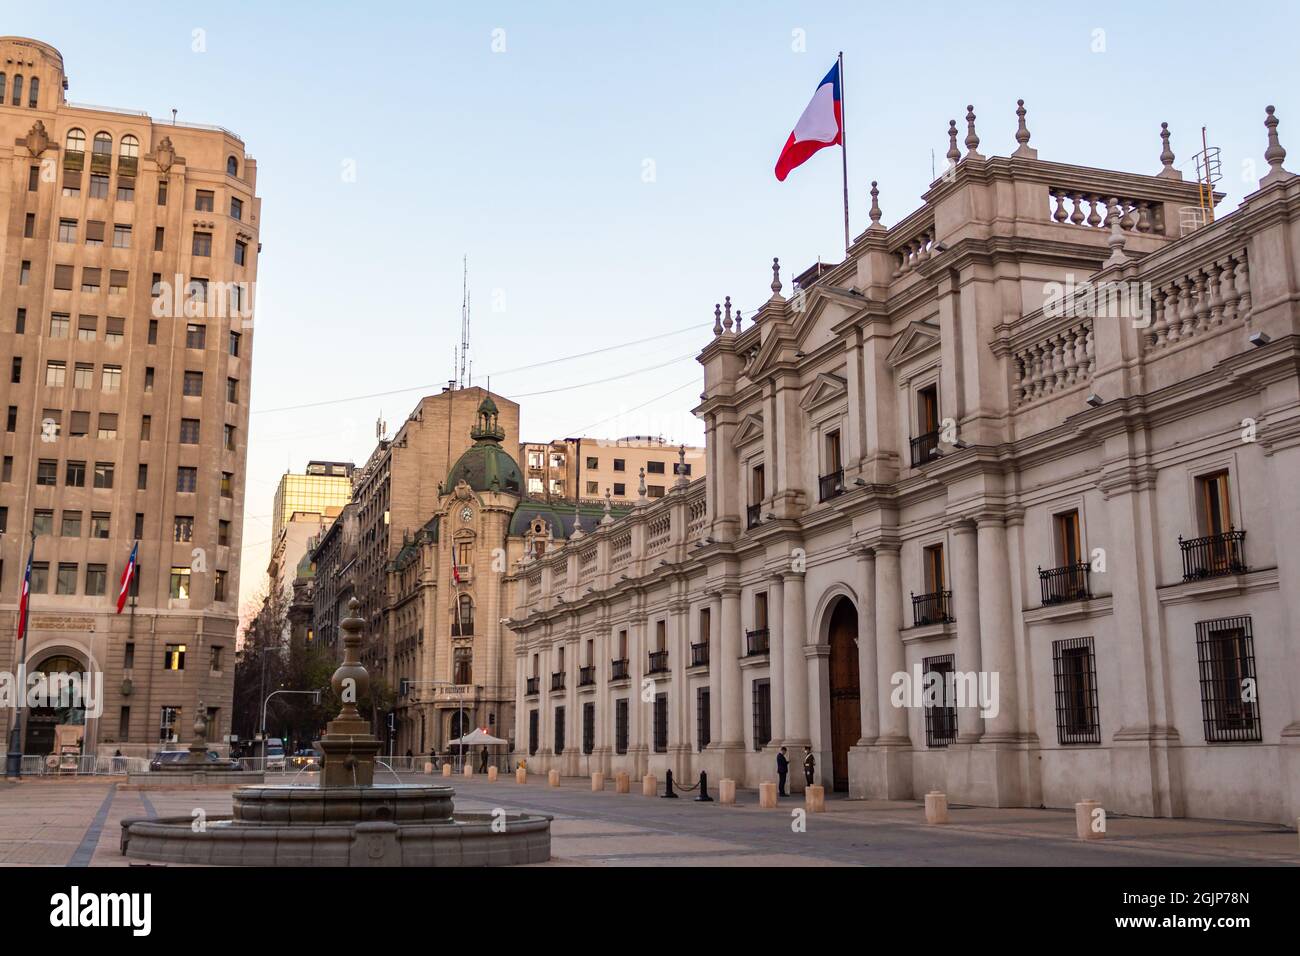 Santiago, Chile - 9. Sep 2021: Chilenischer Präsidentenpalast am Nachmittag. La moneda Palast. Sitz des Präsidenten der Republik Chile. Palast der Stockfoto